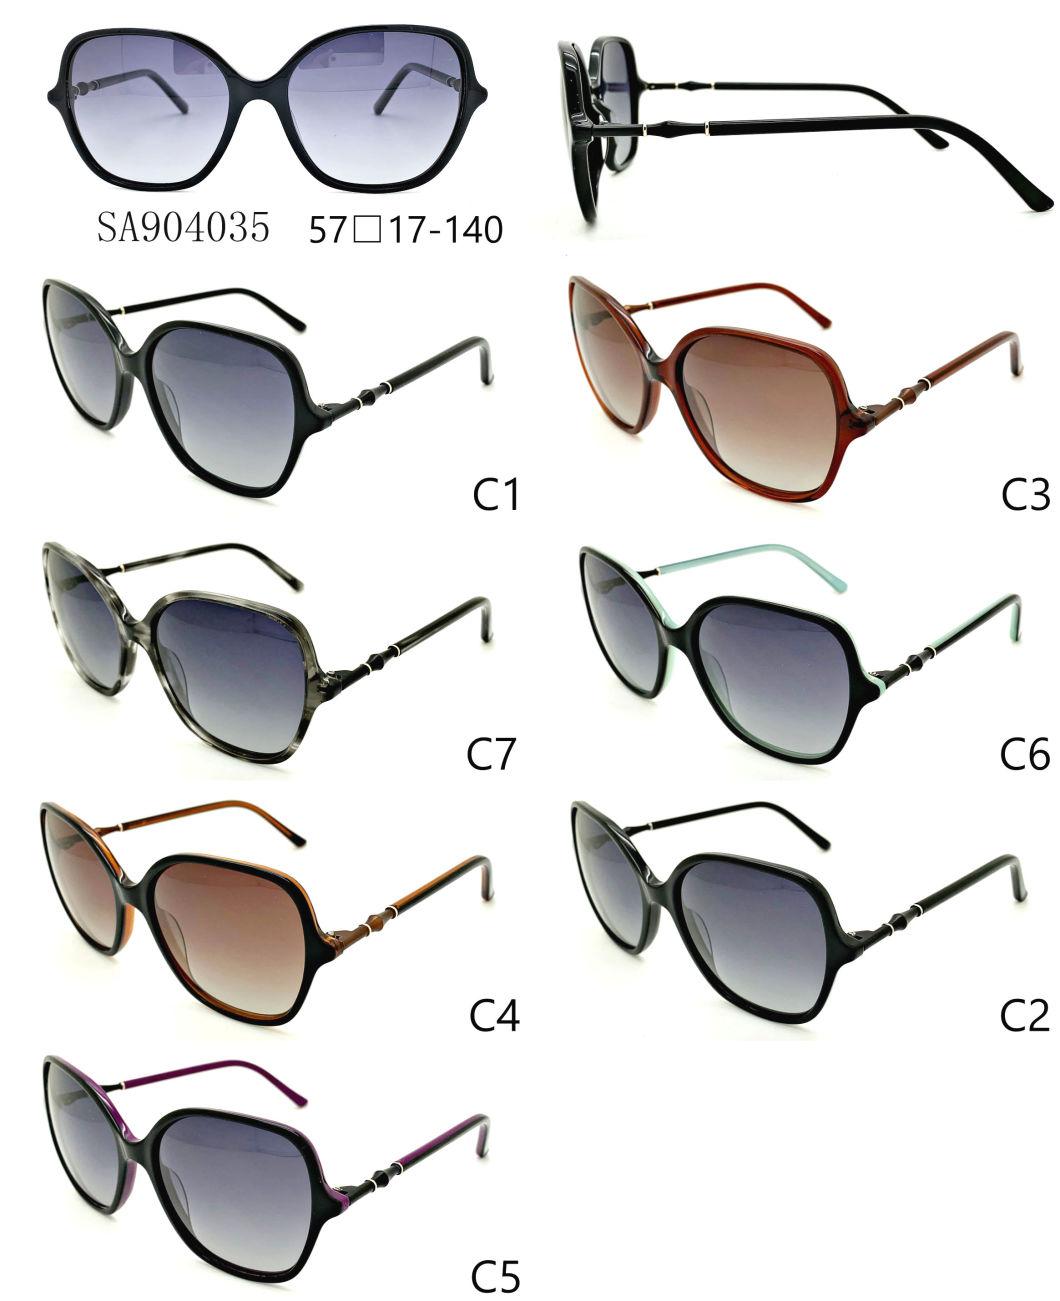 2020 Hot Sale Classical Acetate Sunglasses in Stock